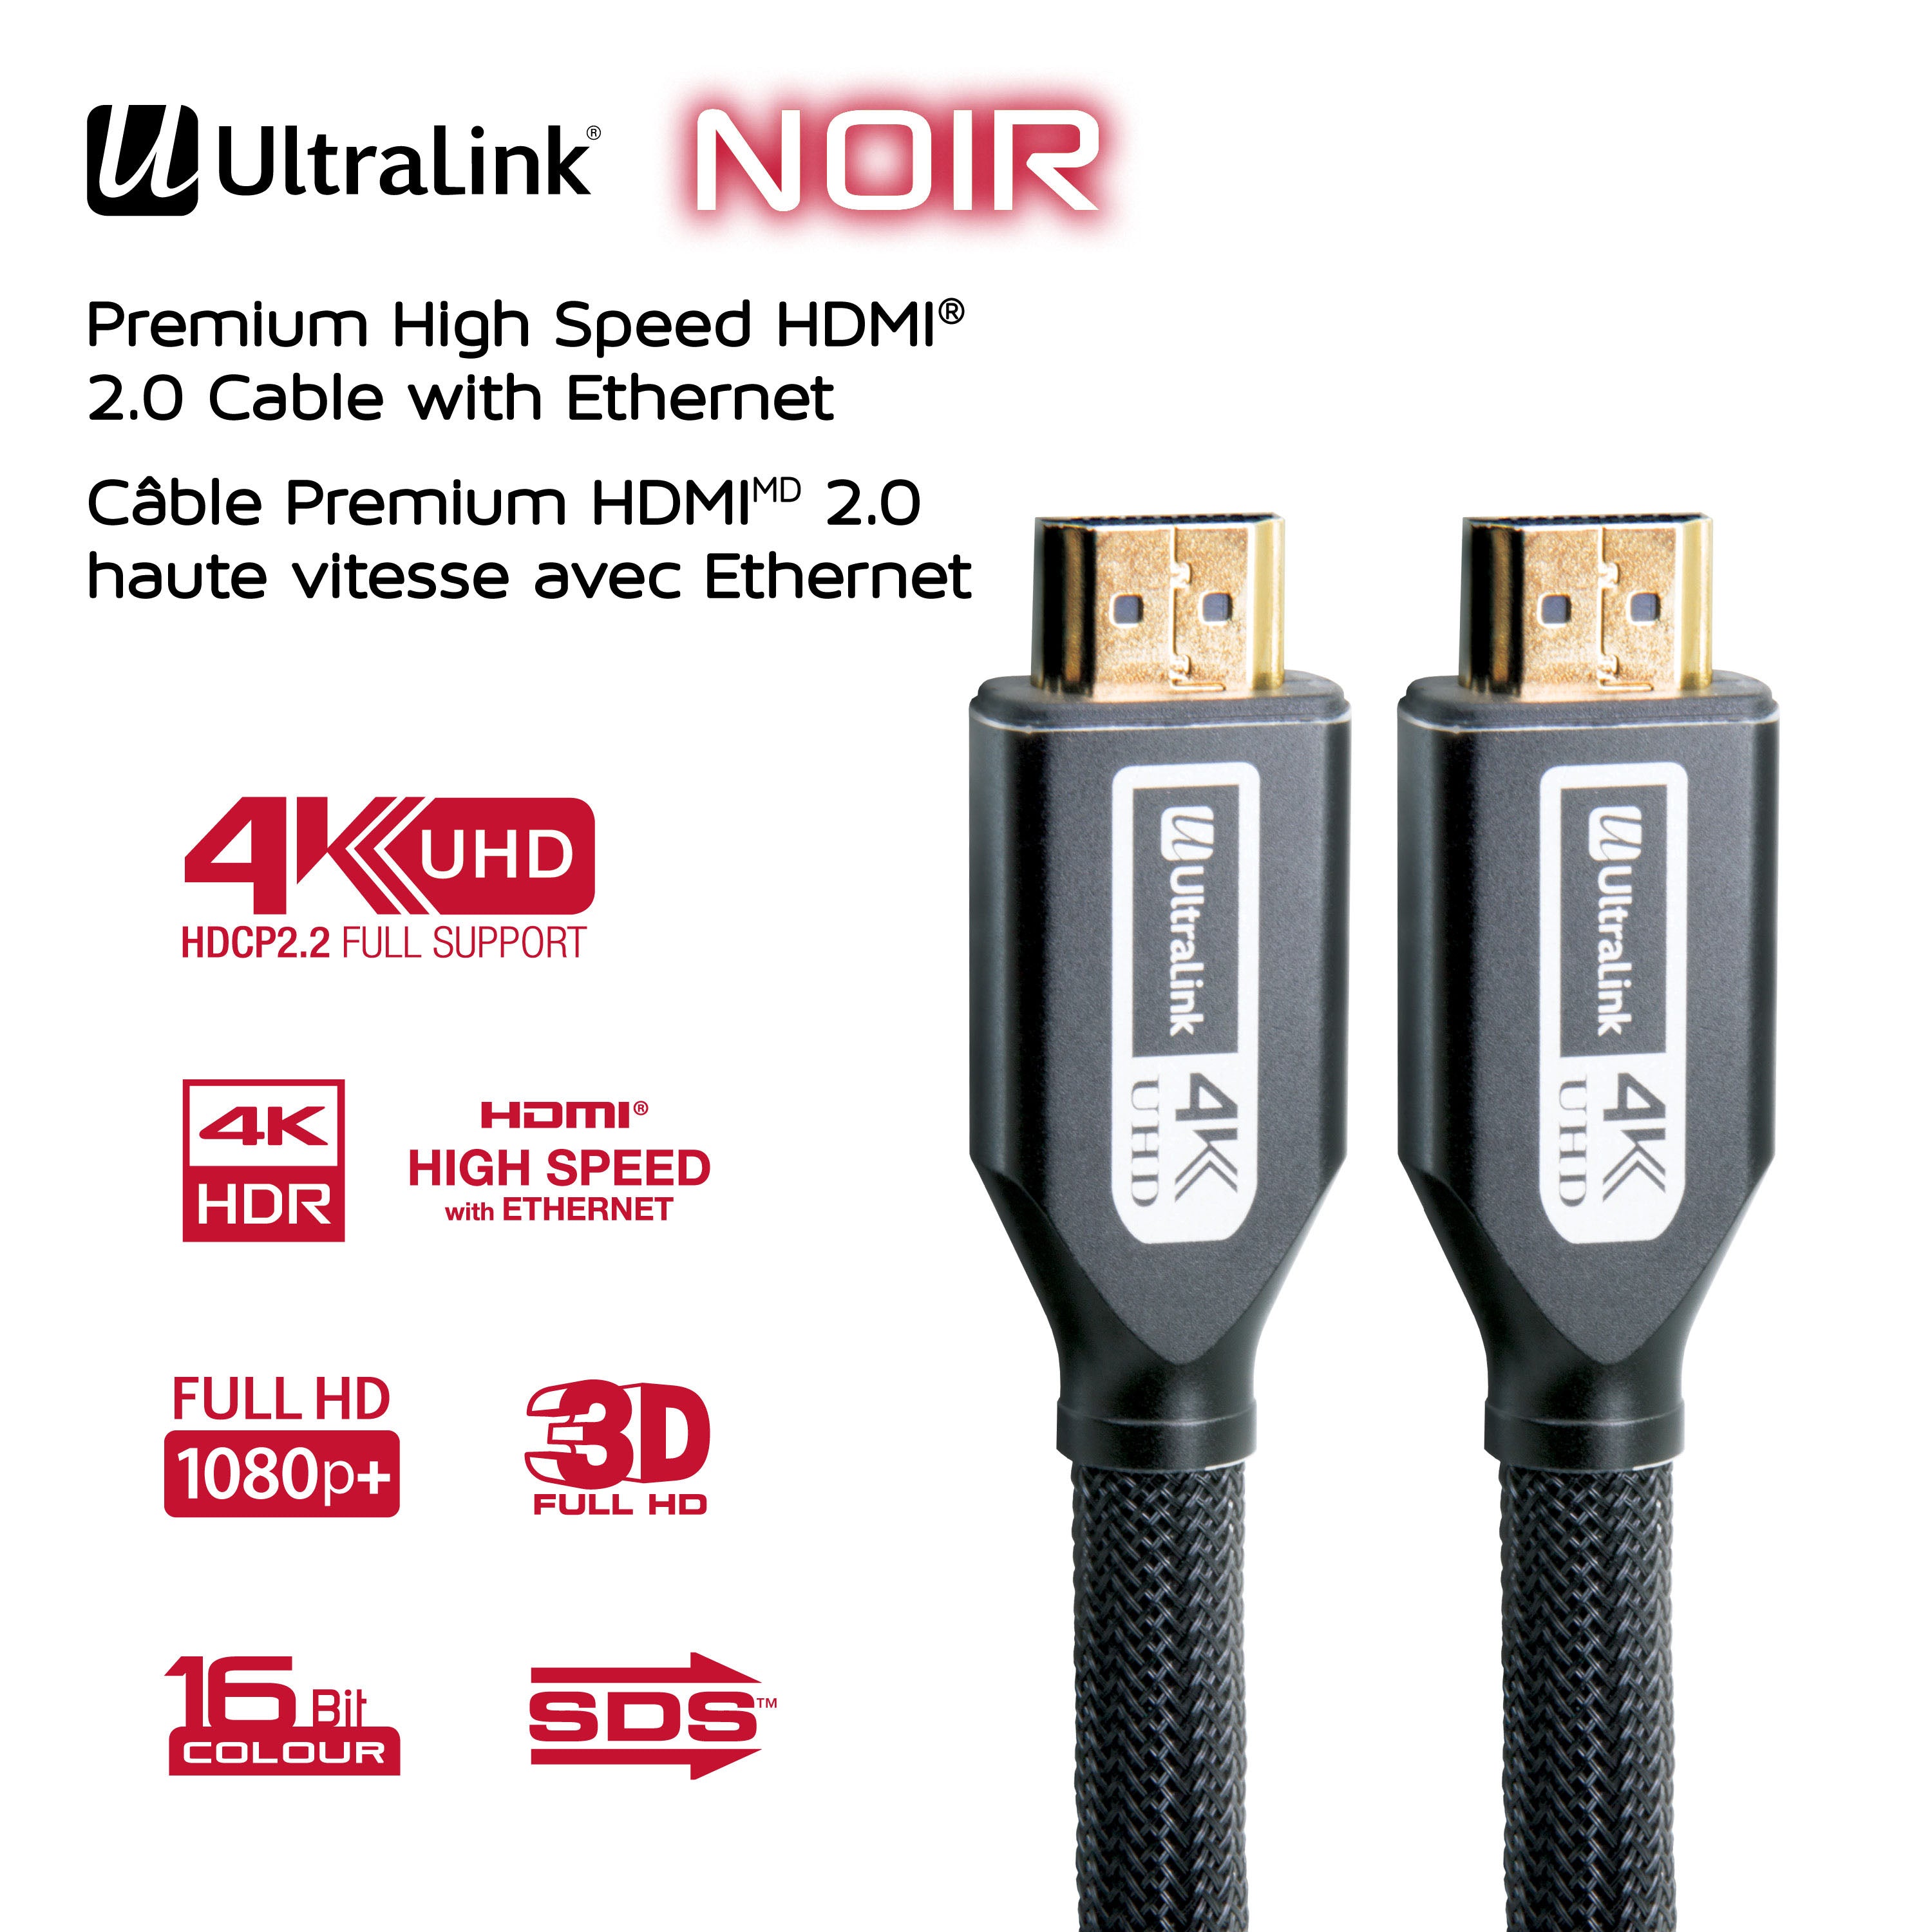 Ultralink Noir HDMI Cable: Premium HDMI Certified